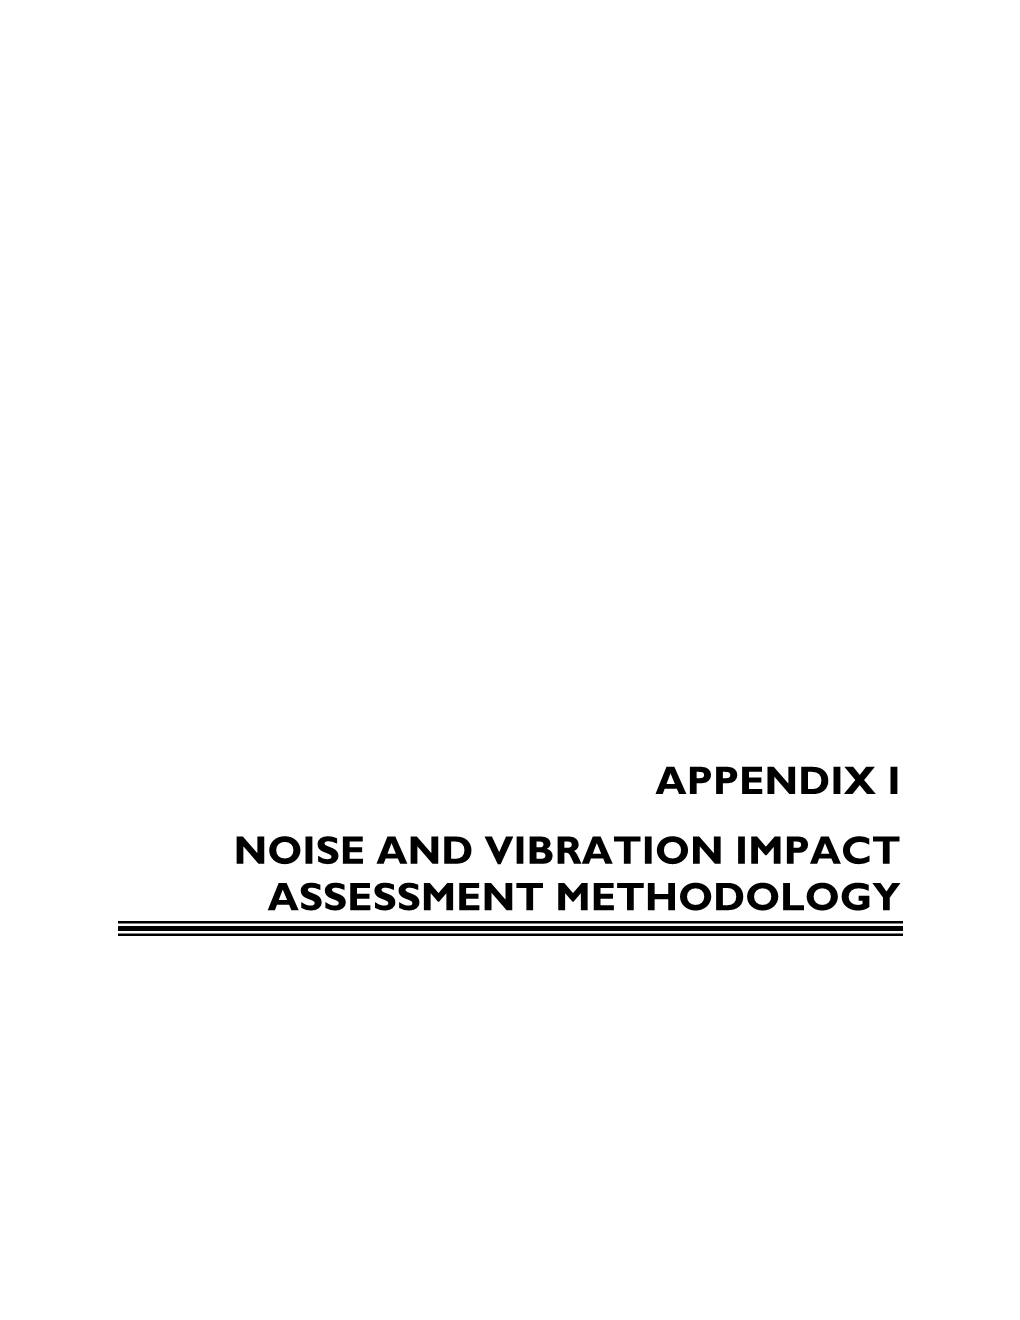 Appendix I Noise and Vibration Impact Assessment Methodology